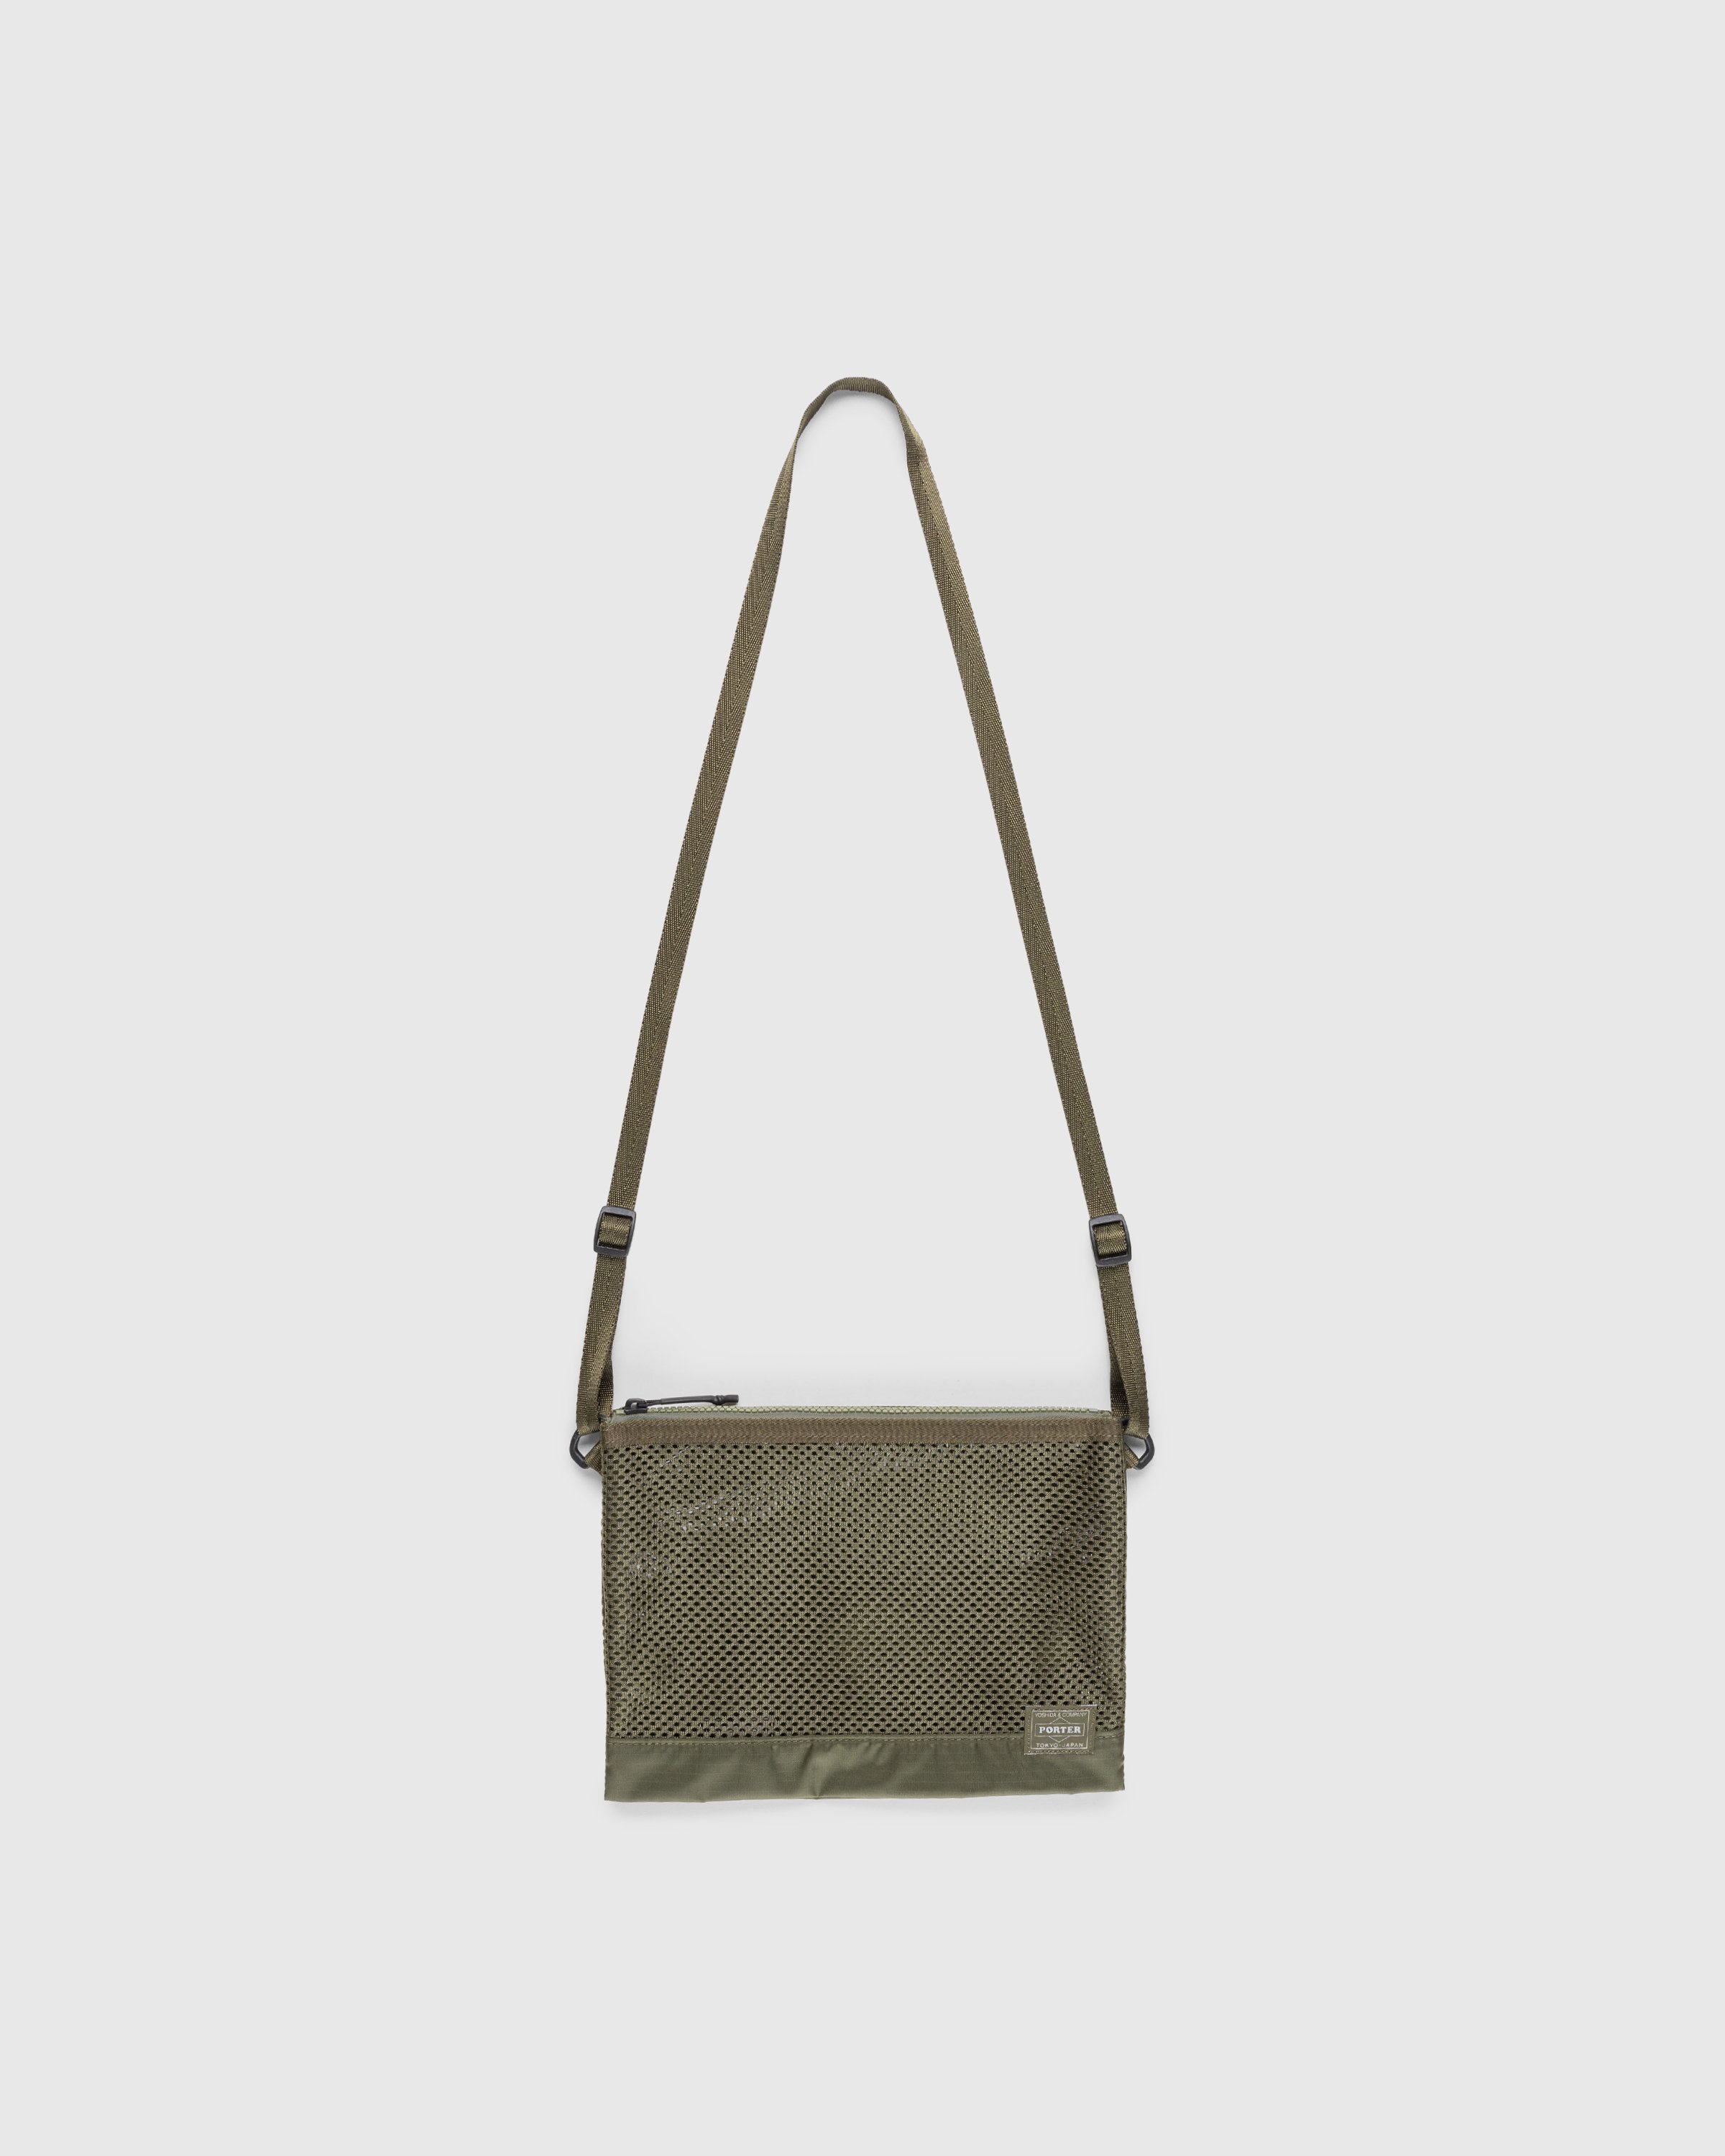 Porter-Yoshida & Co. - Sacoche Screen Shoulder Bag Green - Accessories - Green - Image 1